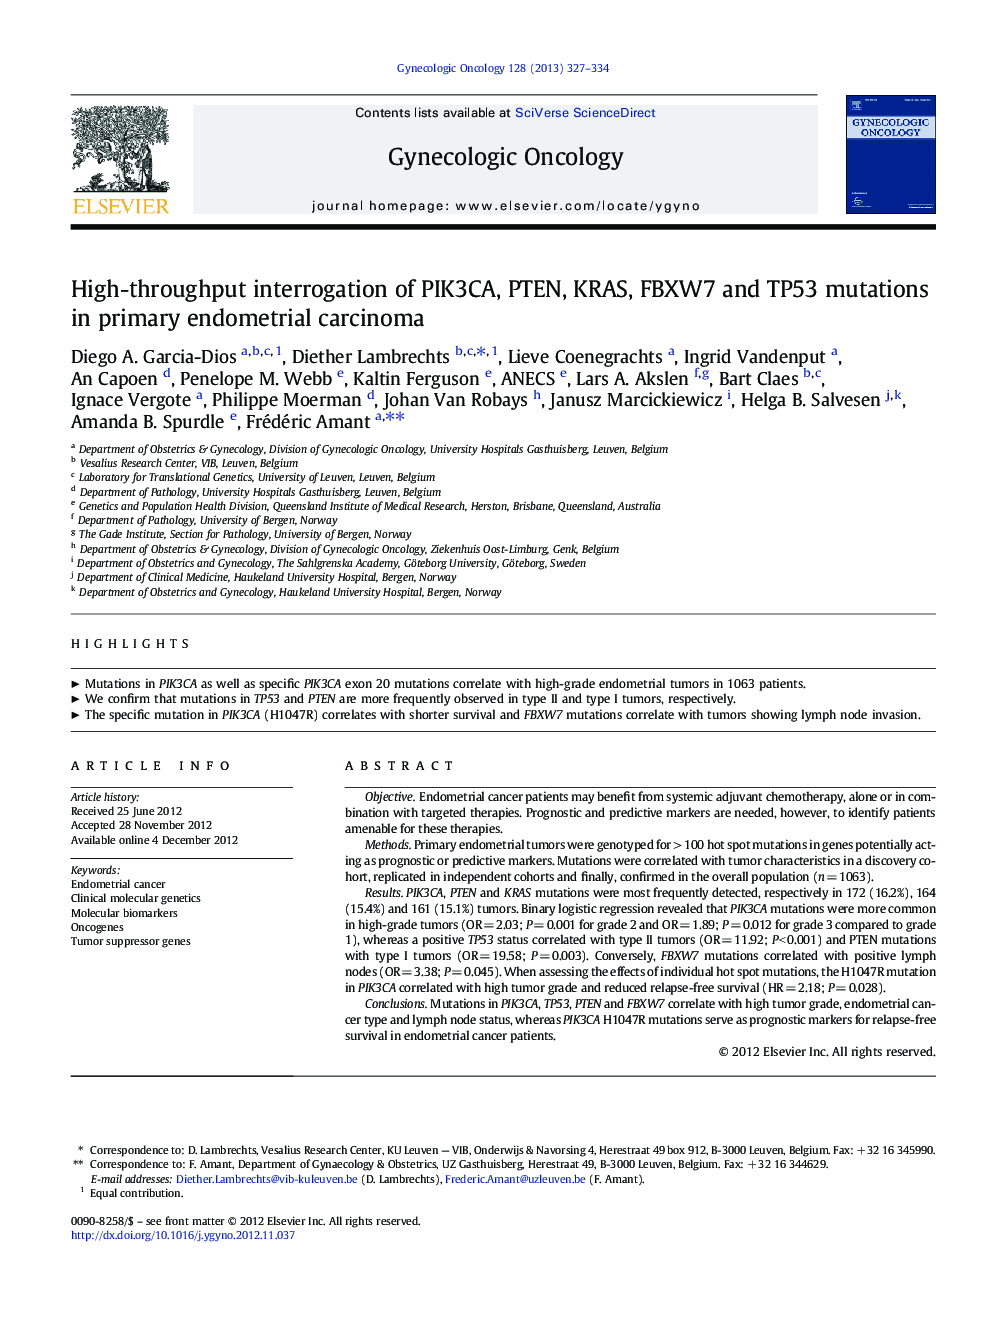 High-throughput interrogation of PIK3CA, PTEN, KRAS, FBXW7 and TP53 mutations in primary endometrial carcinoma